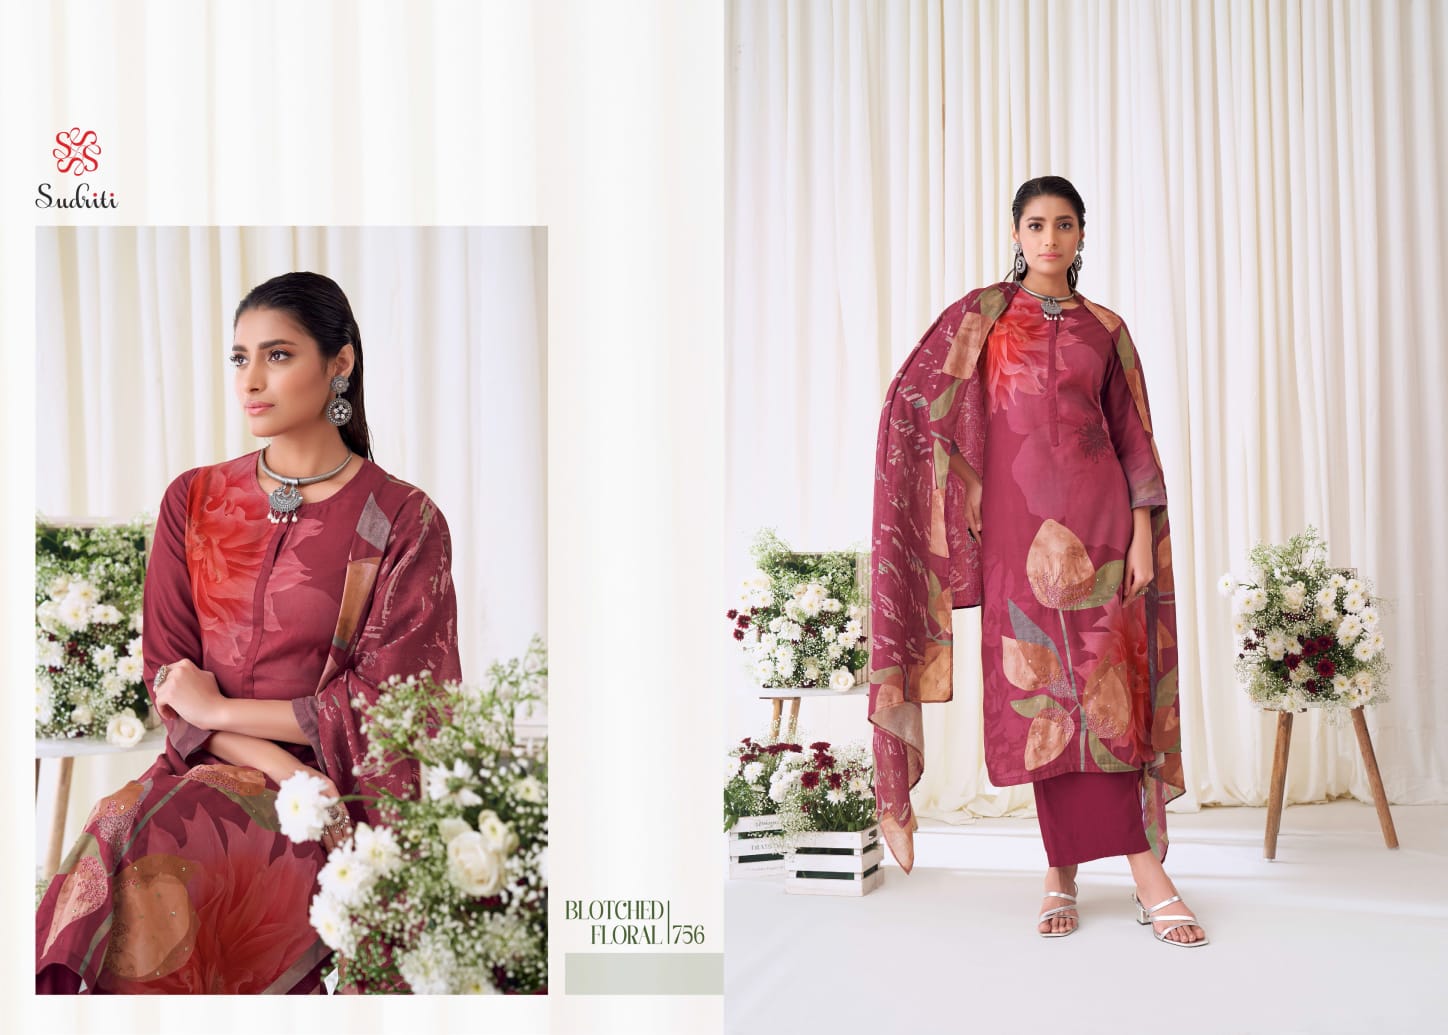 Blotched Floral Sudriti Sahiba Pashmina Suits